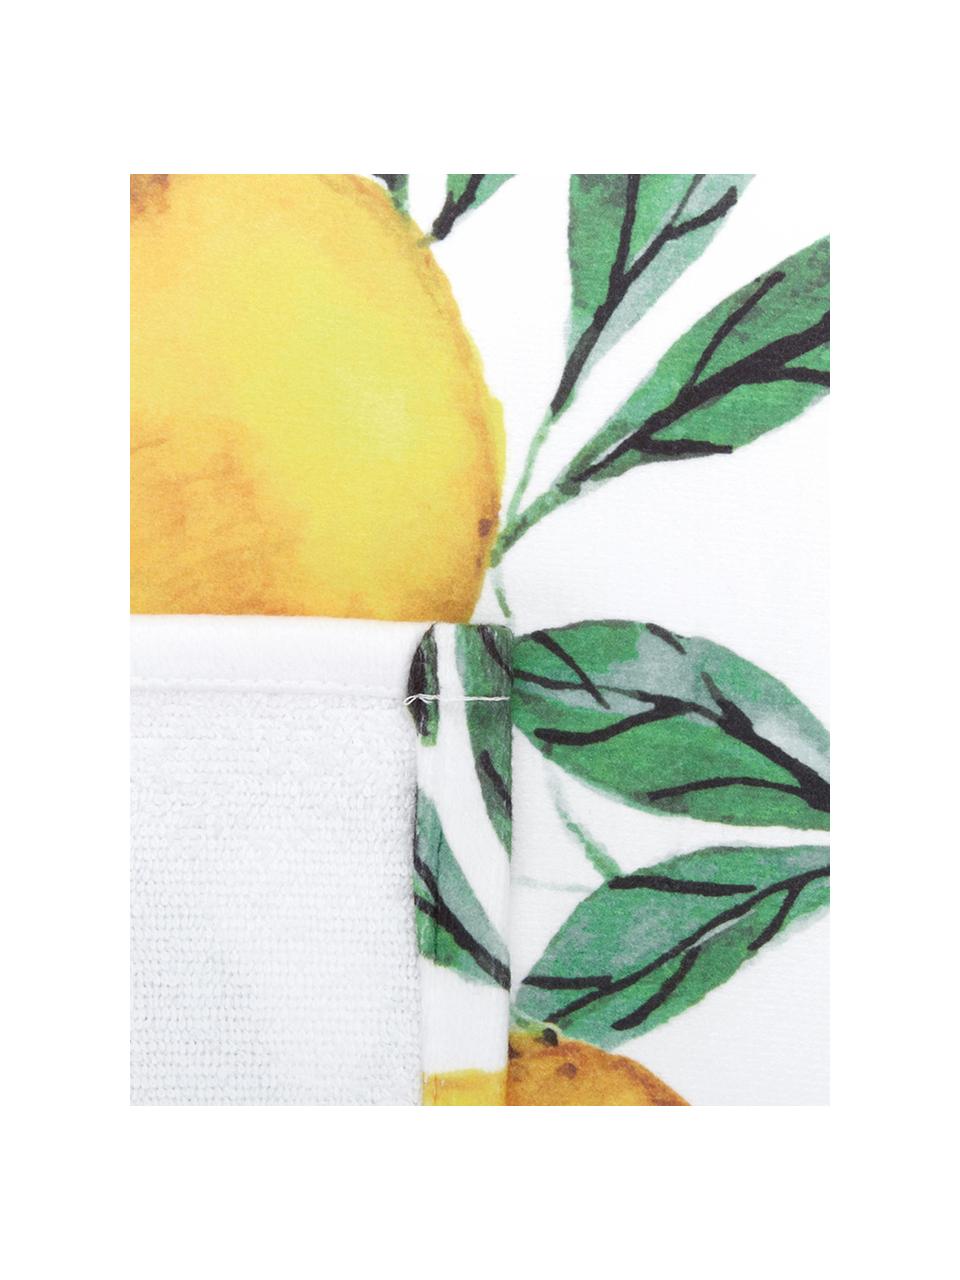 Toalla de playa ligera Lemon, 55% poliéster, 45% algodón
Gramaje ligero 340 g/m², Blanco, verde, amarillo, An 70 x L 150 cm